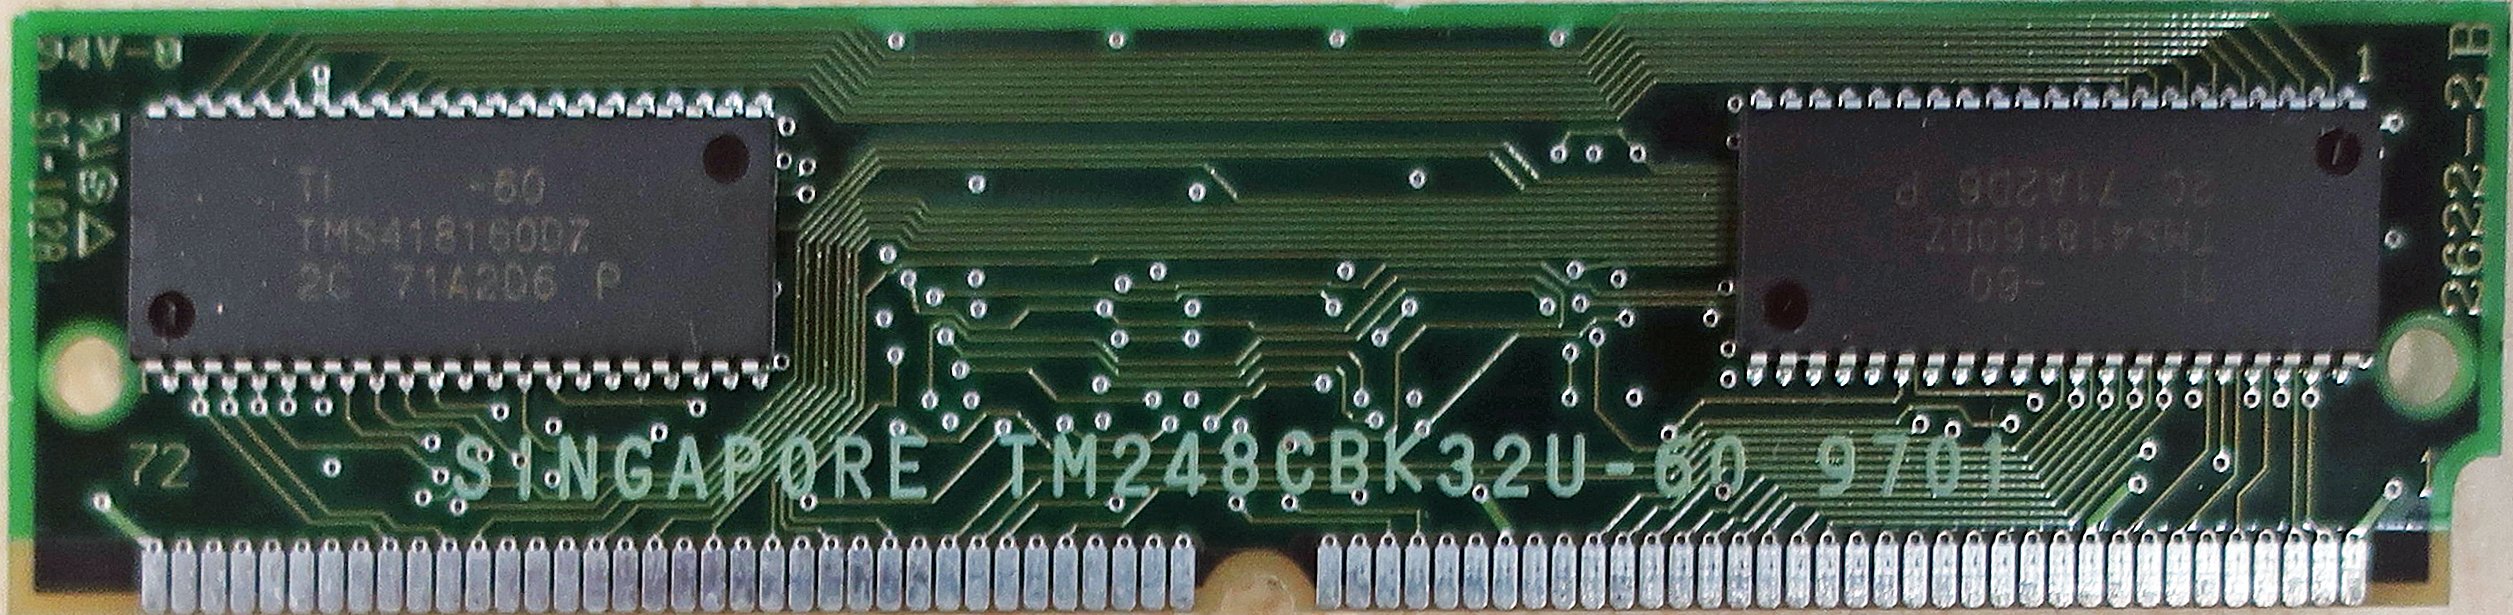 Speicherkarte Topless 1 MB x 32 Bit RAM (museum comp:ex CC BY-NC-SA)